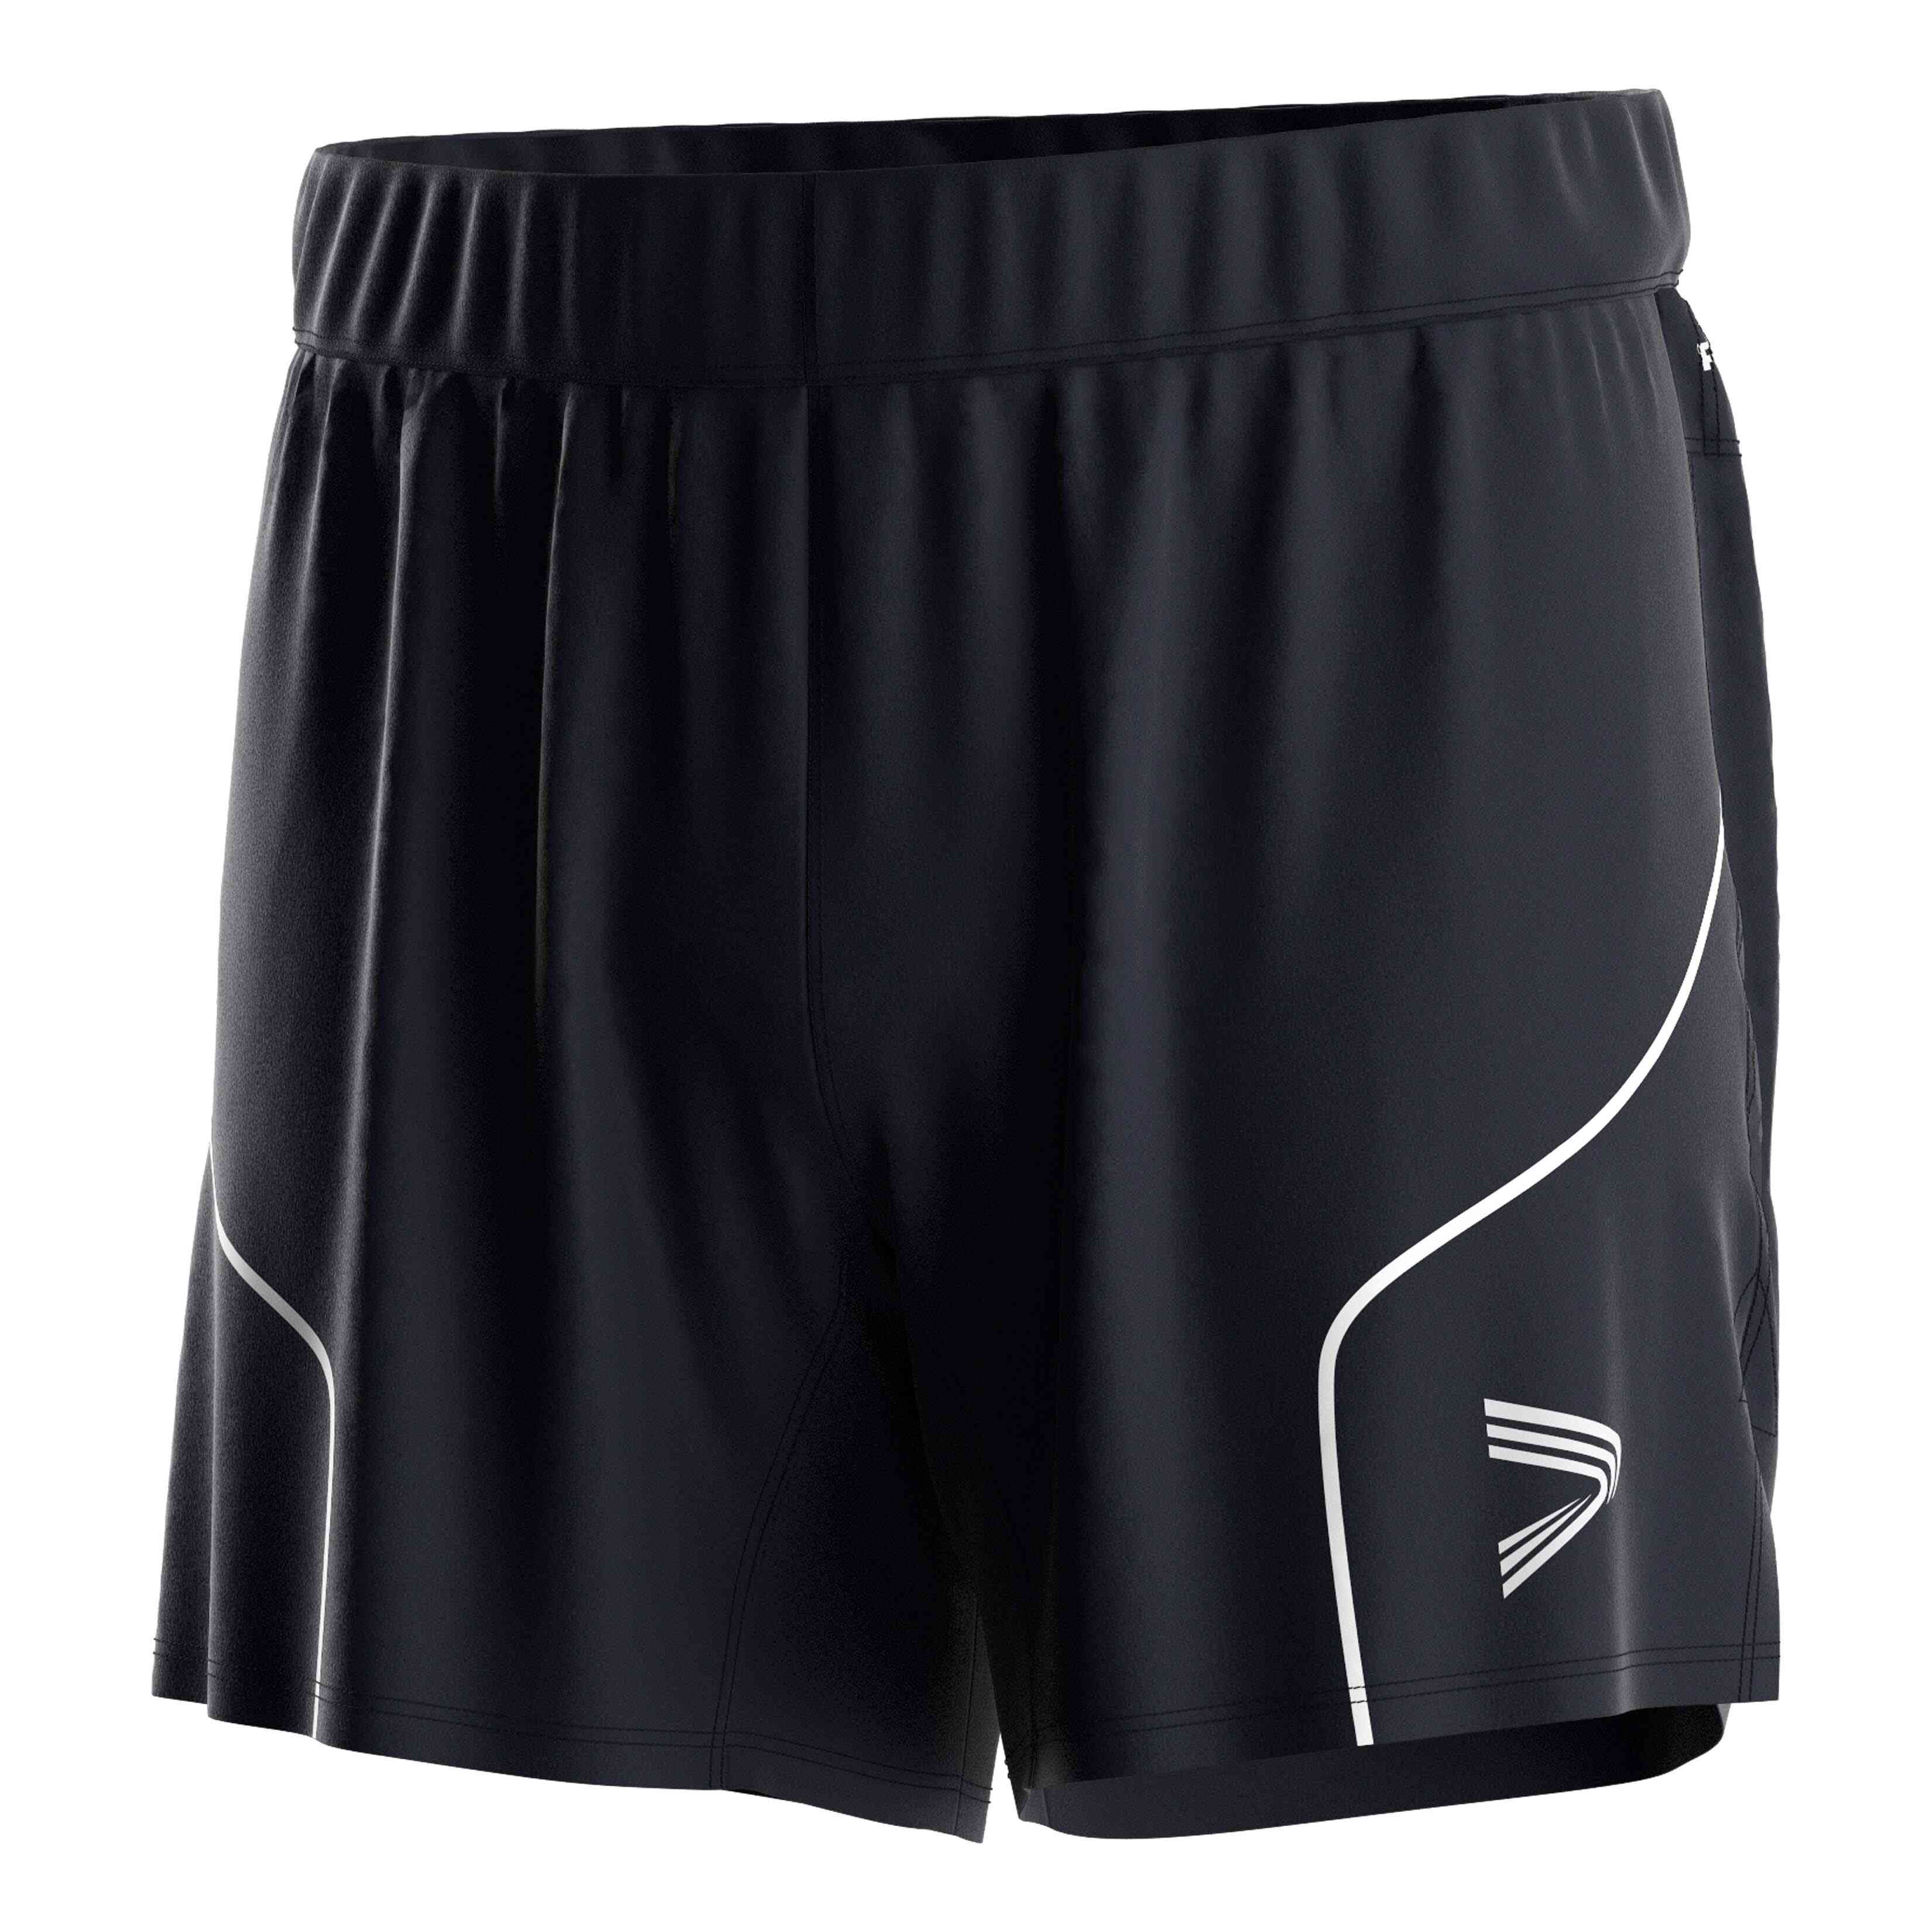 
                Rise tennis ball shorts custom black tennis shorts classic